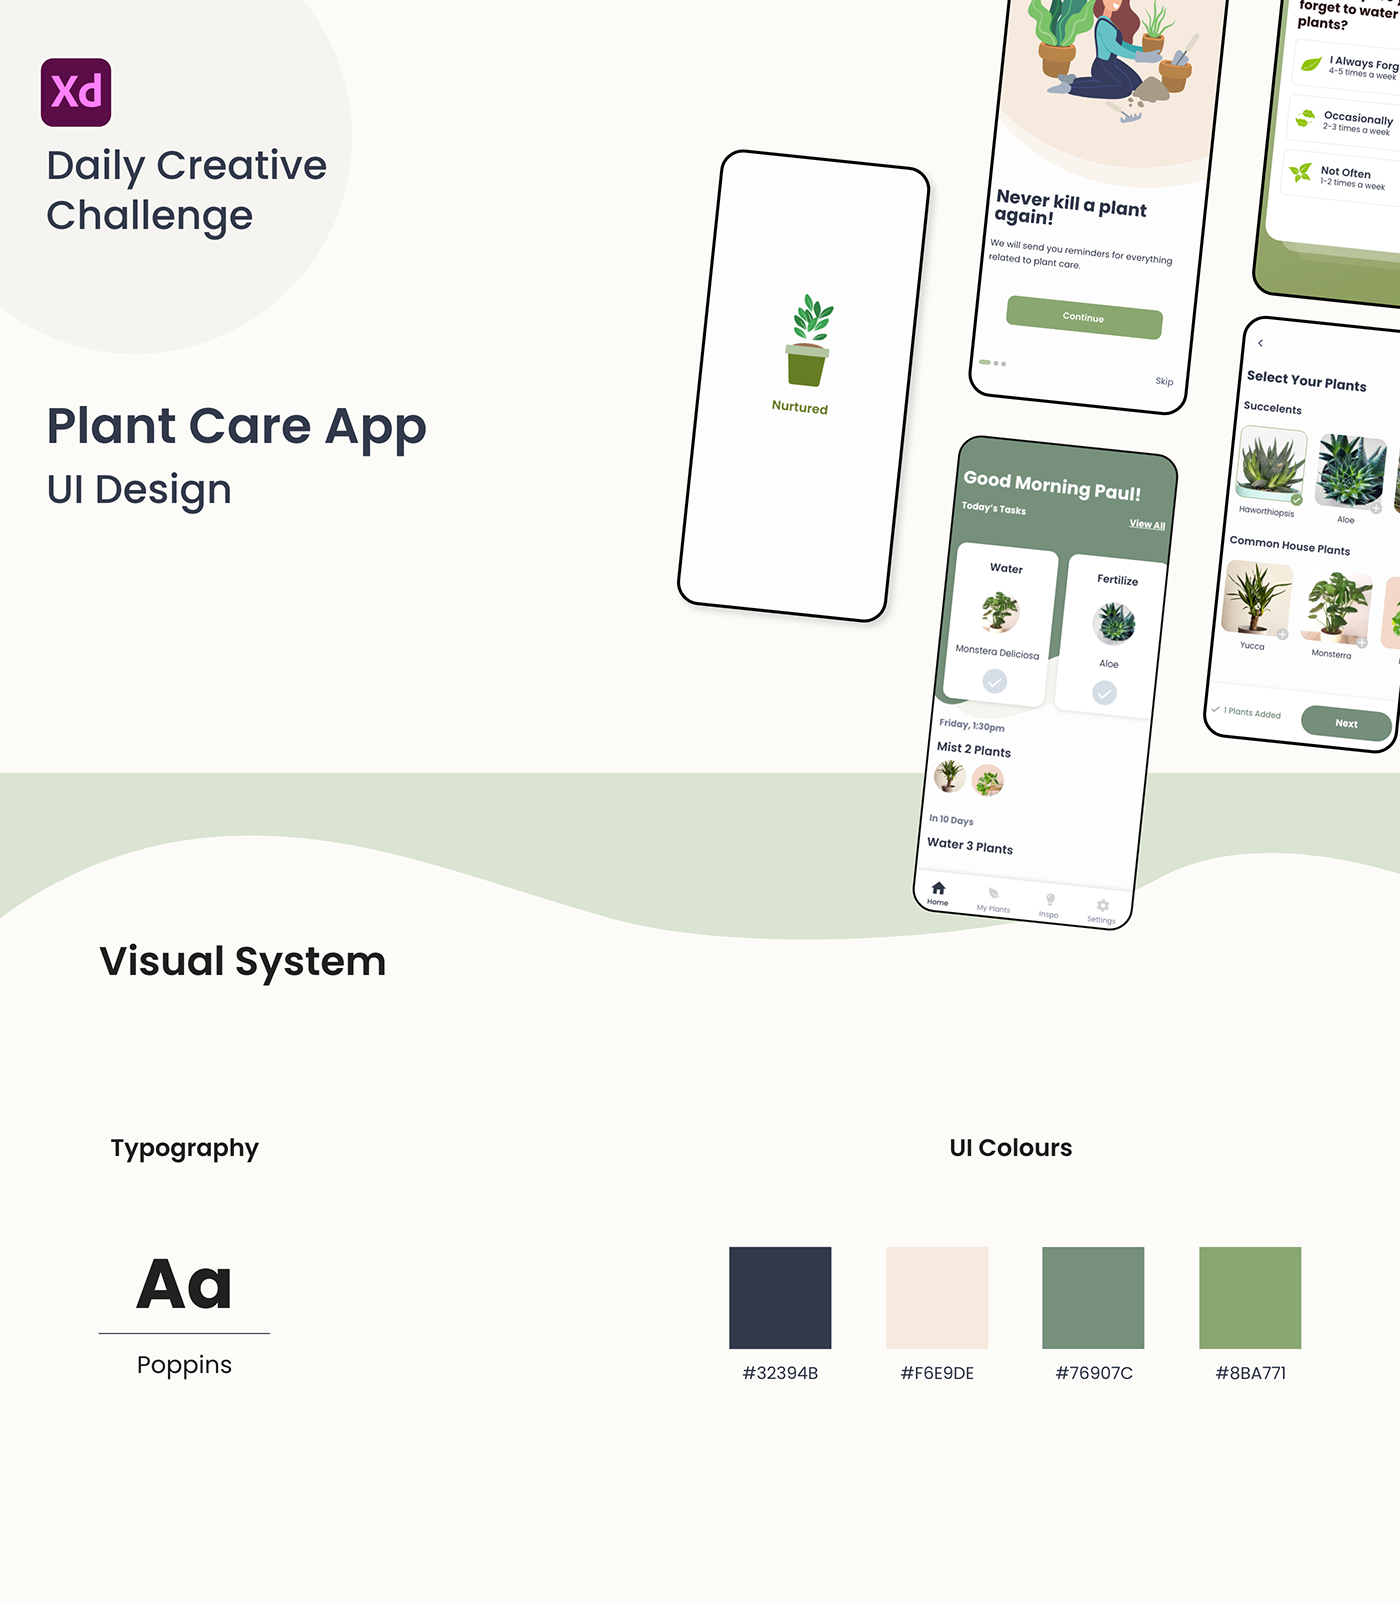 adobexd app app design Nature plant care plants ui design UI/UX xdcreativechallenge xddailychallenge